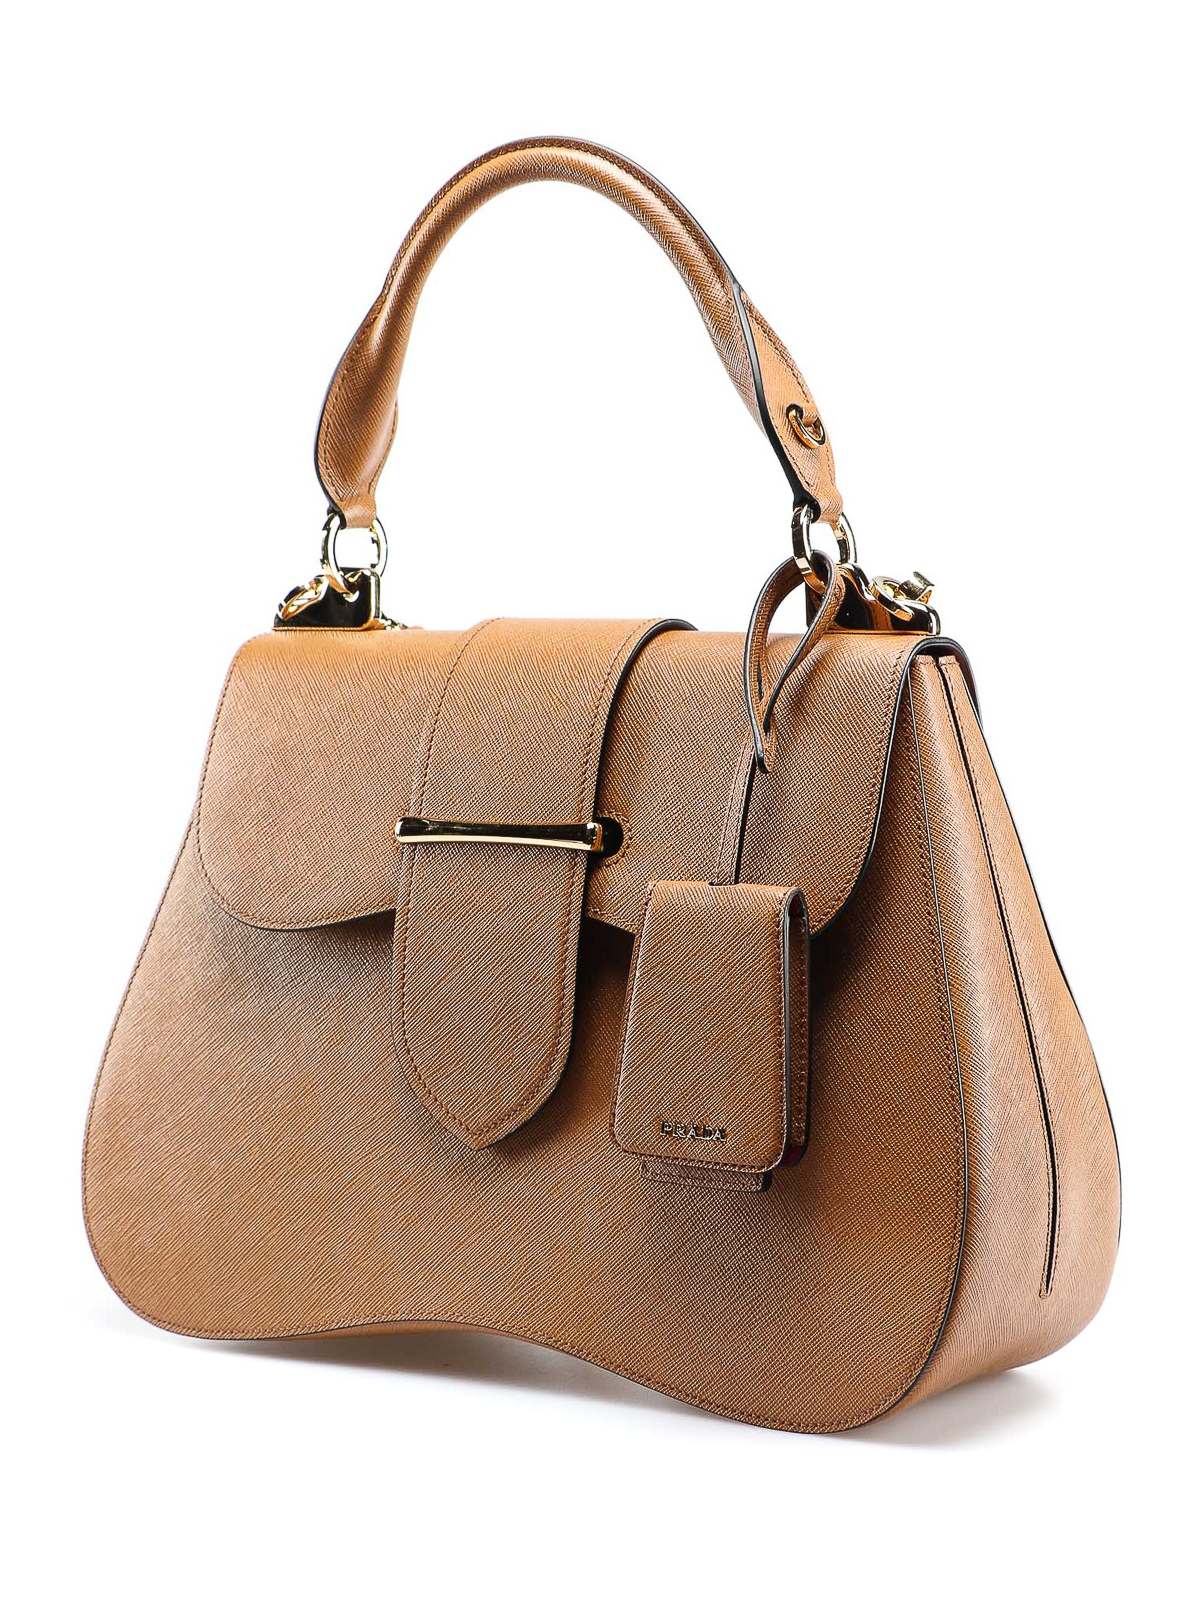 prada sidonie saffiano leather bag price